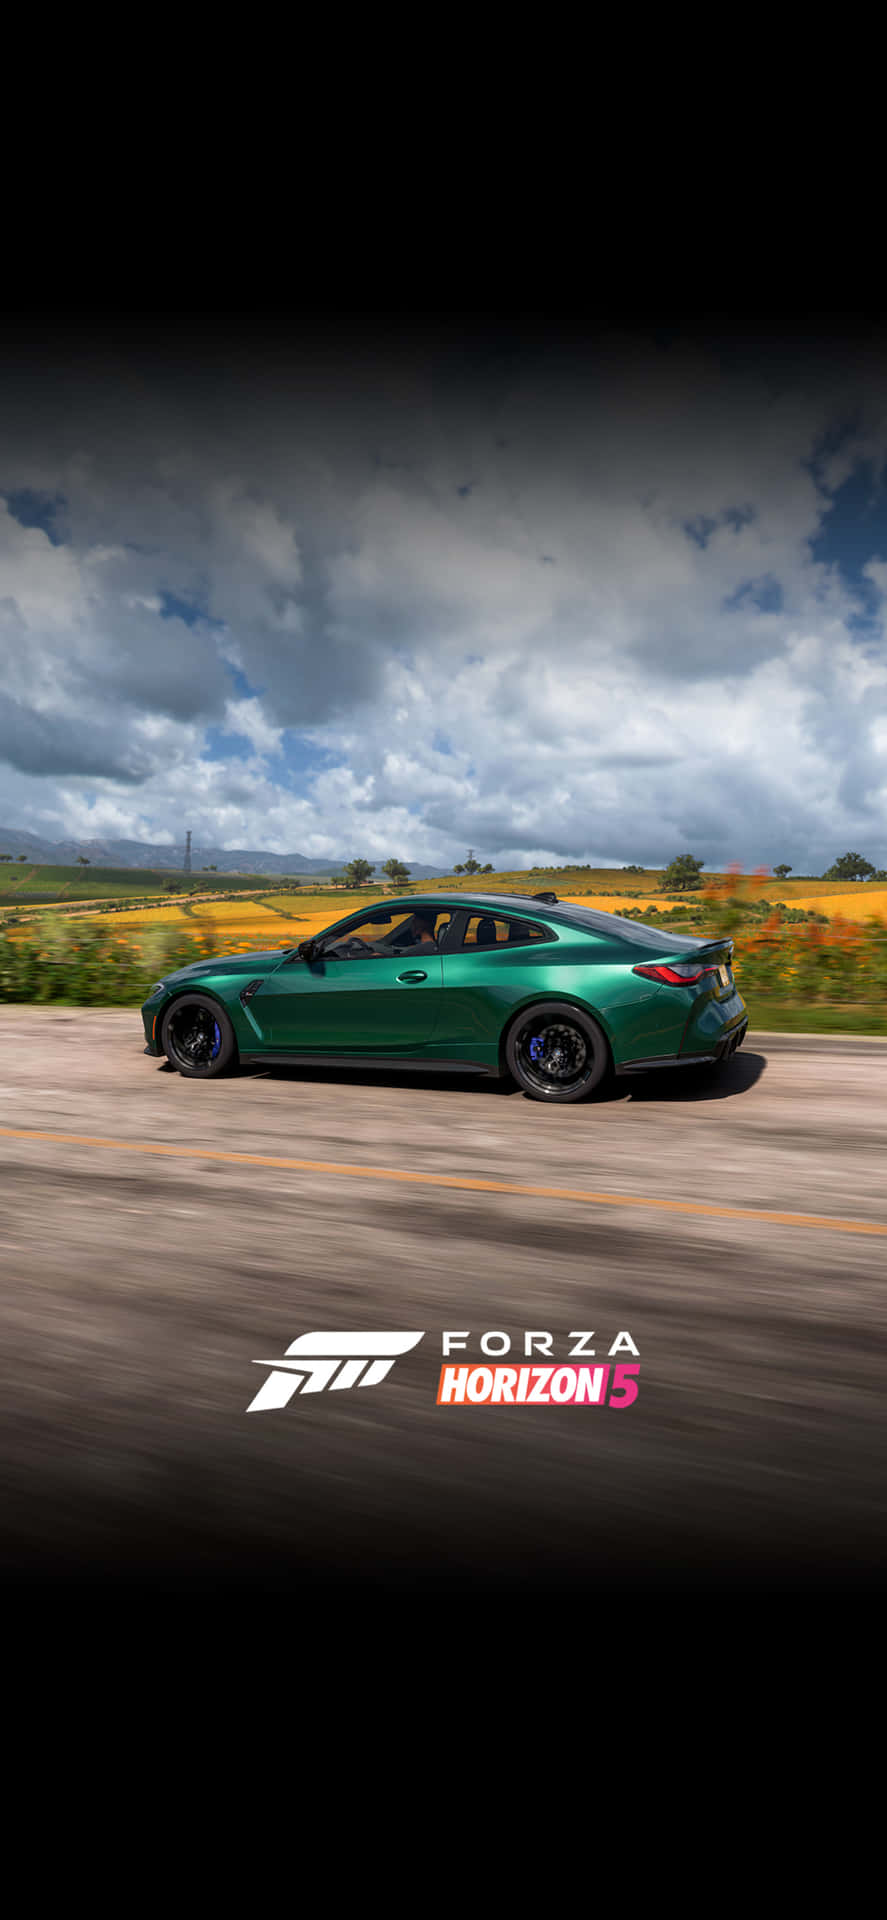 Grönbmw M4 Iphone X Forza Motorsport 7 Bakgrundsbild.